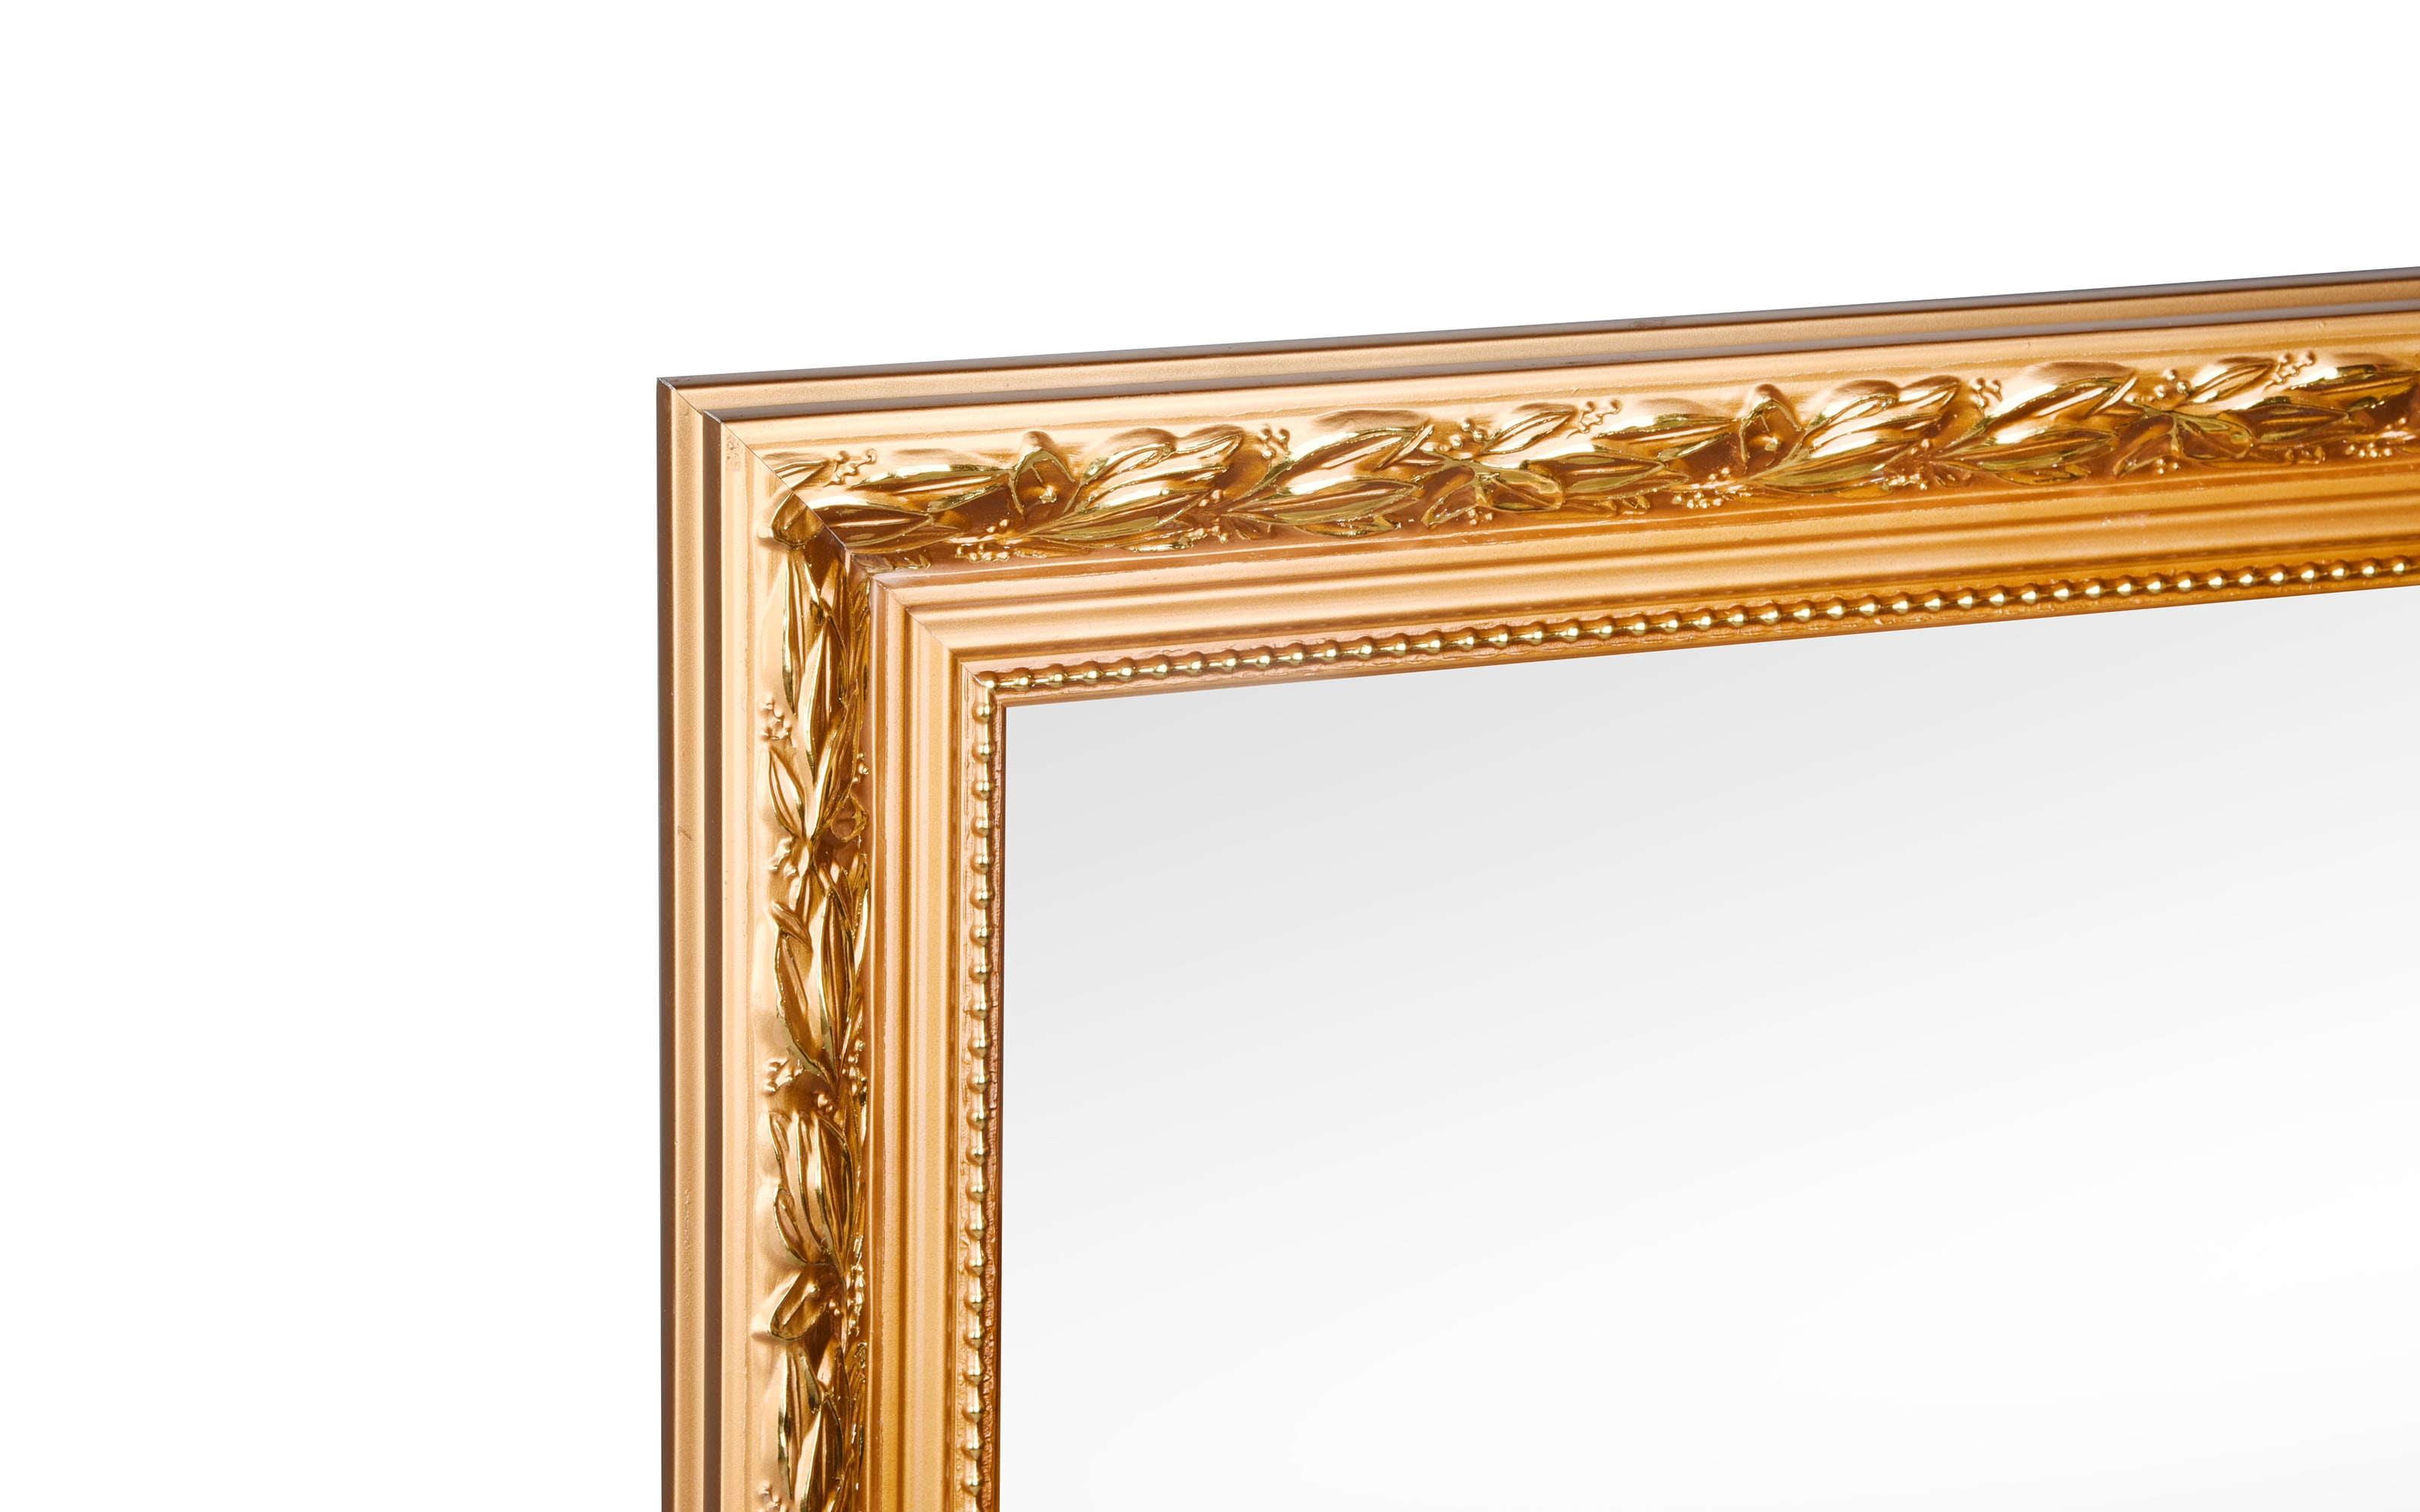 Rahmenspiegel Sonja in goldfarbig, 55 x 70 cm